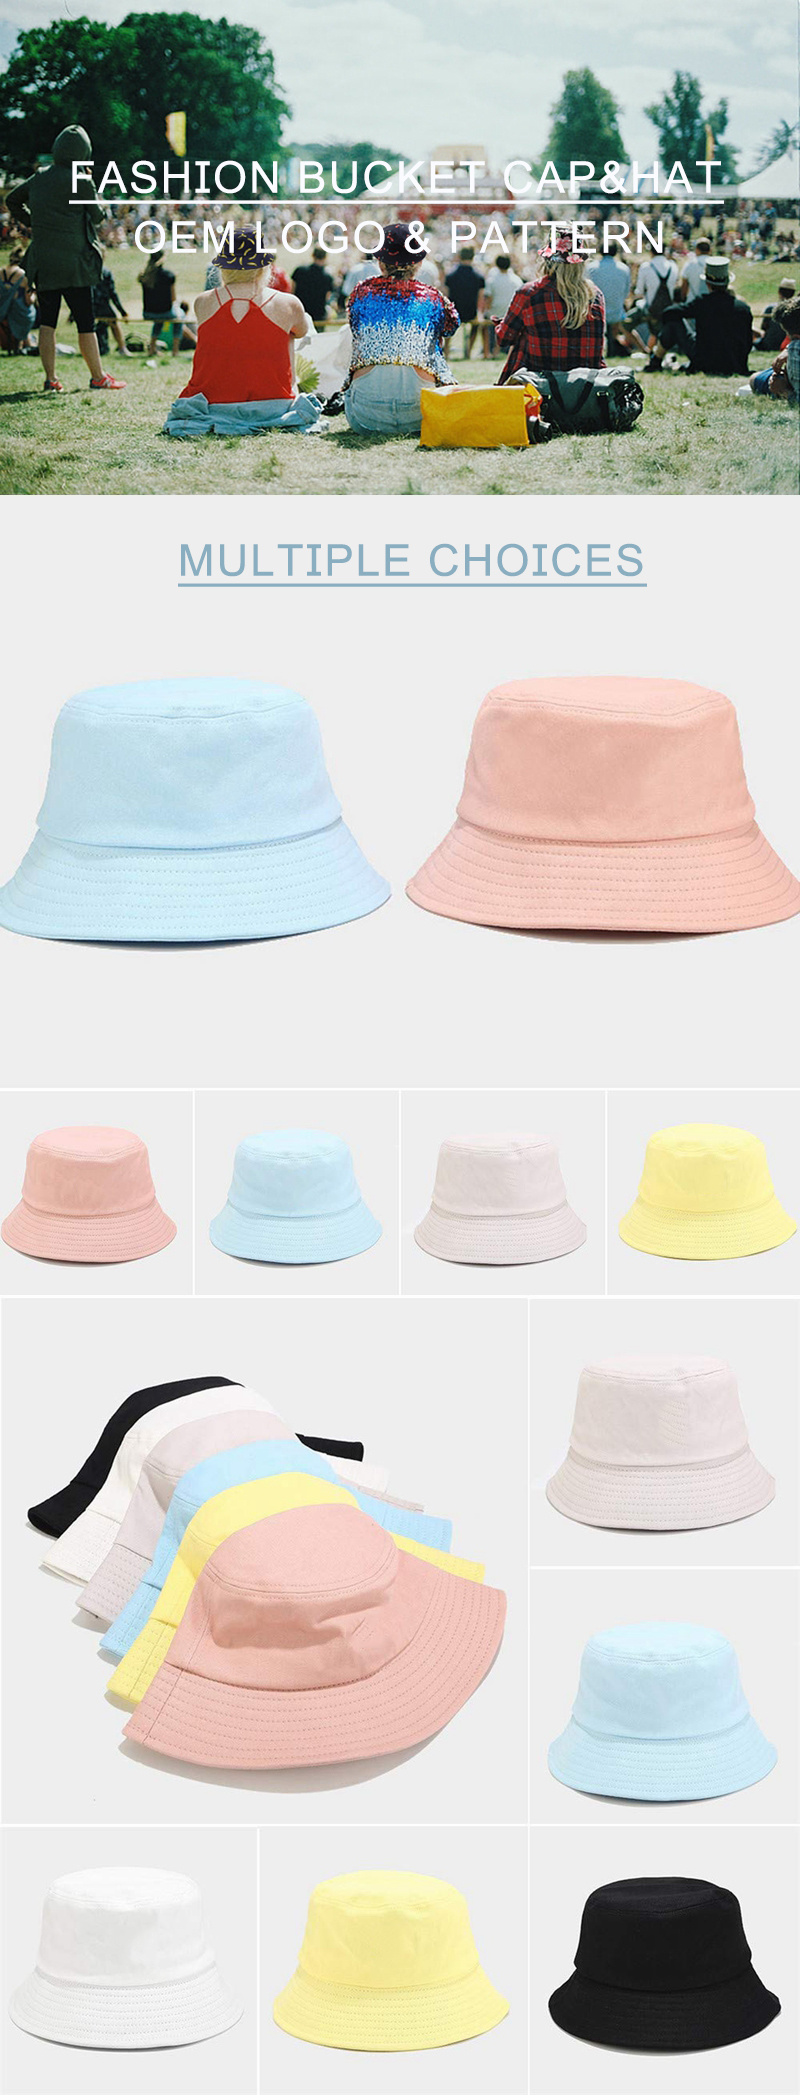 Head Caps & Bucket Hats / Custom High Quality Caps & Bucket Hats